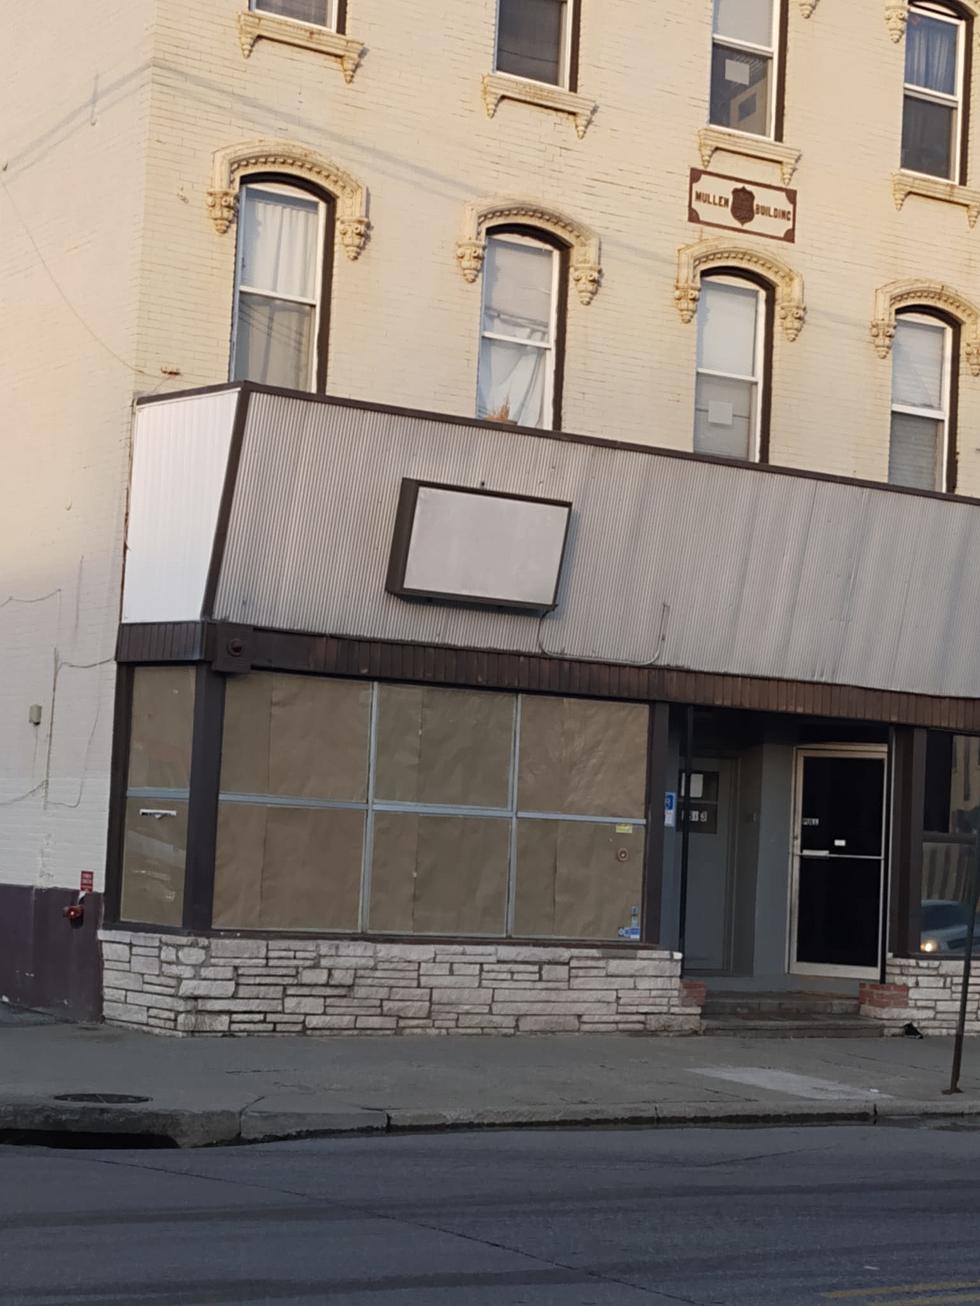 Popular Poughkeepsie Area Restaurant Suddenly Closes